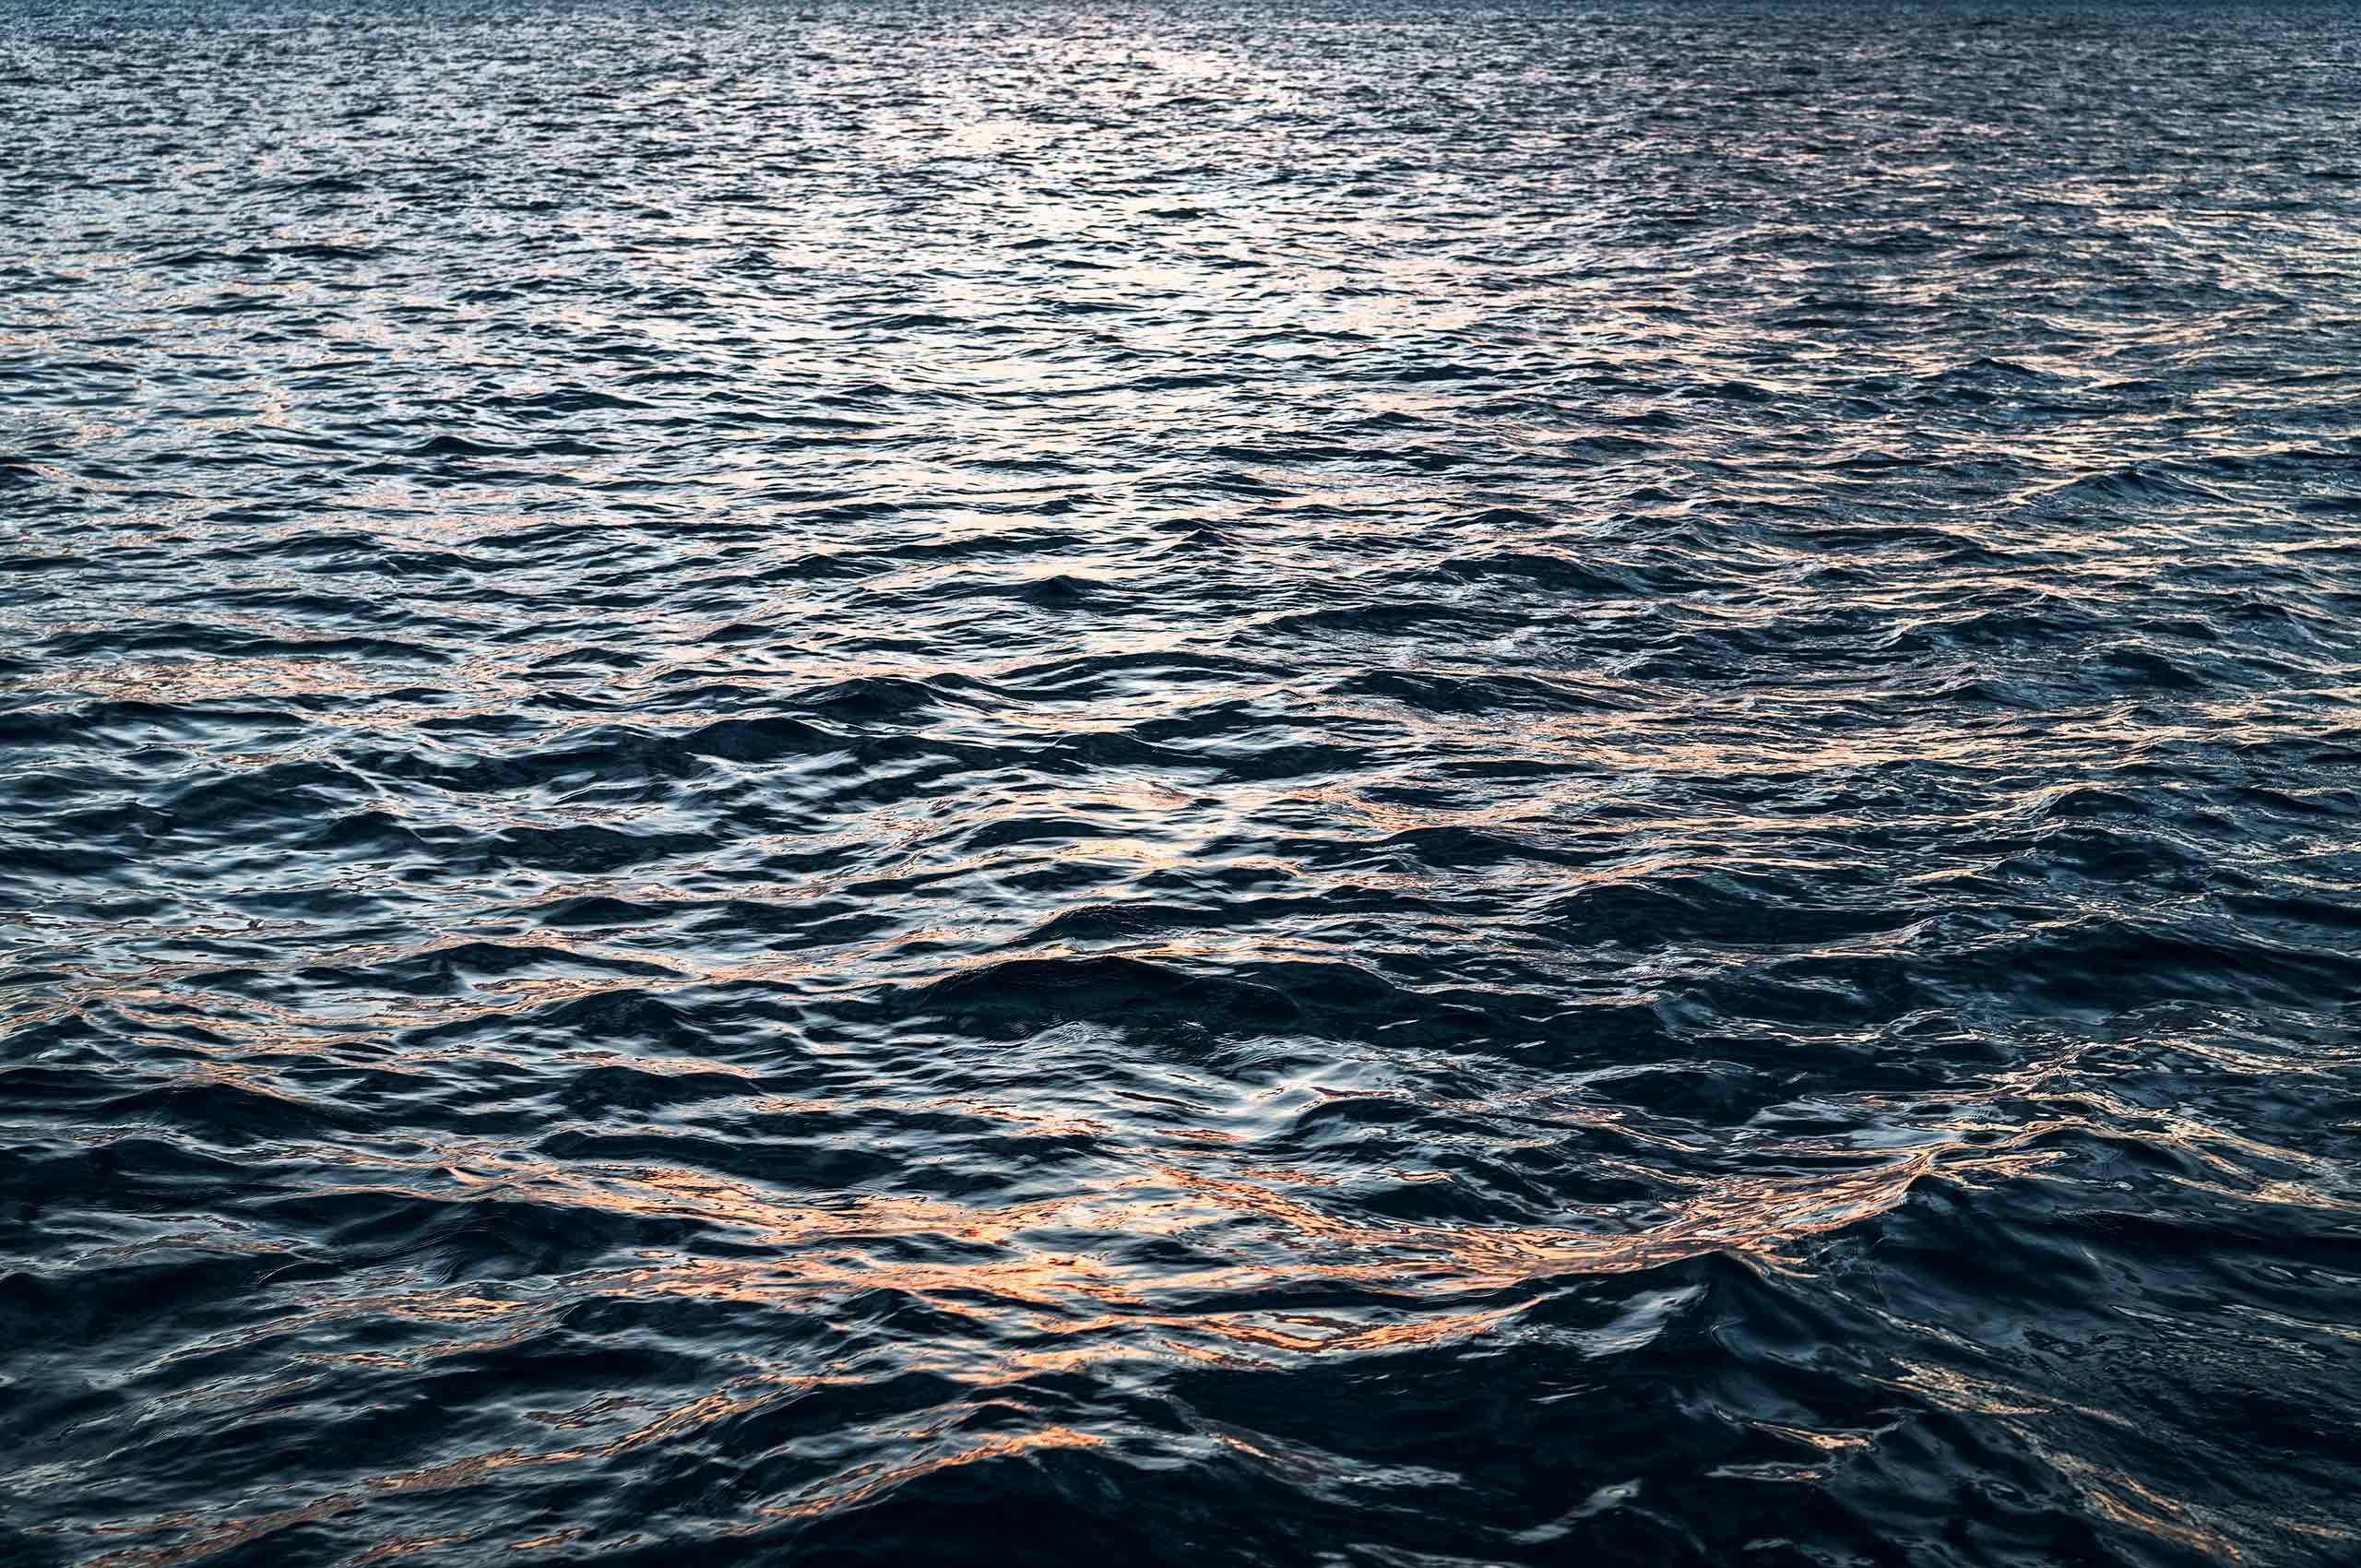 Waves-Ocean-by-HenrikOlundPhotography.jpg